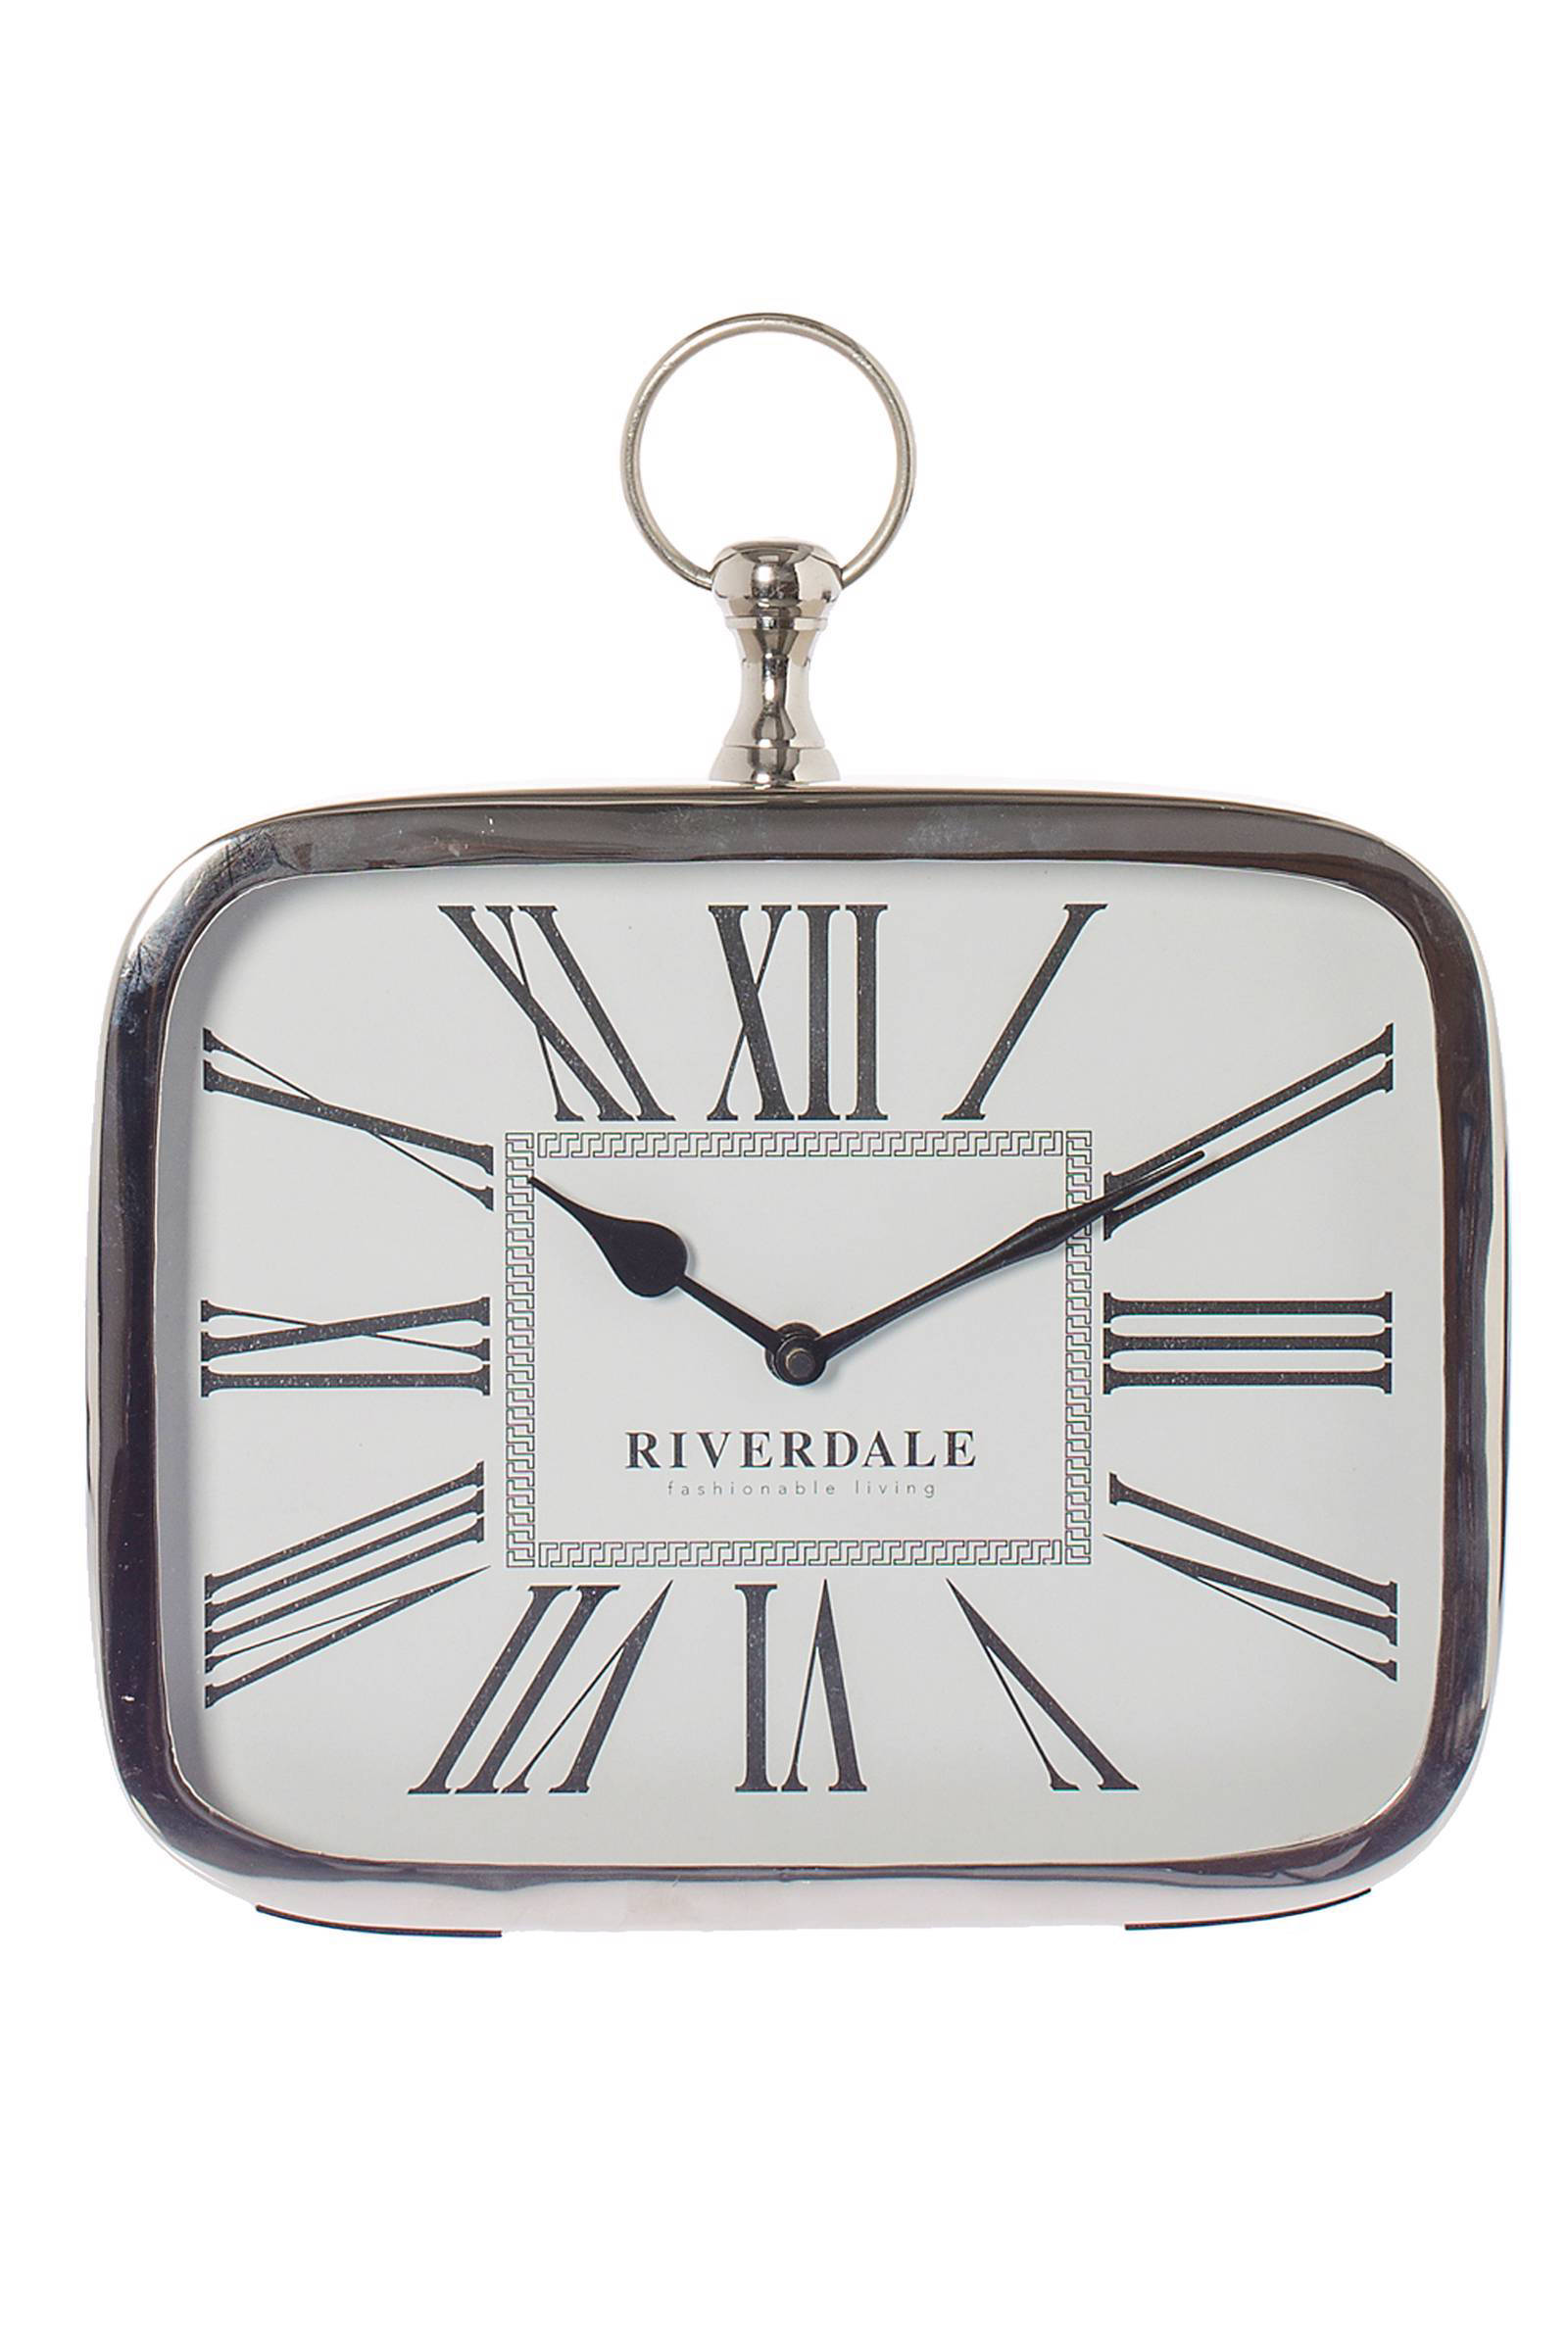 Riverdale Luton Tafelklok Zilver 30 x 25 cm online kopen